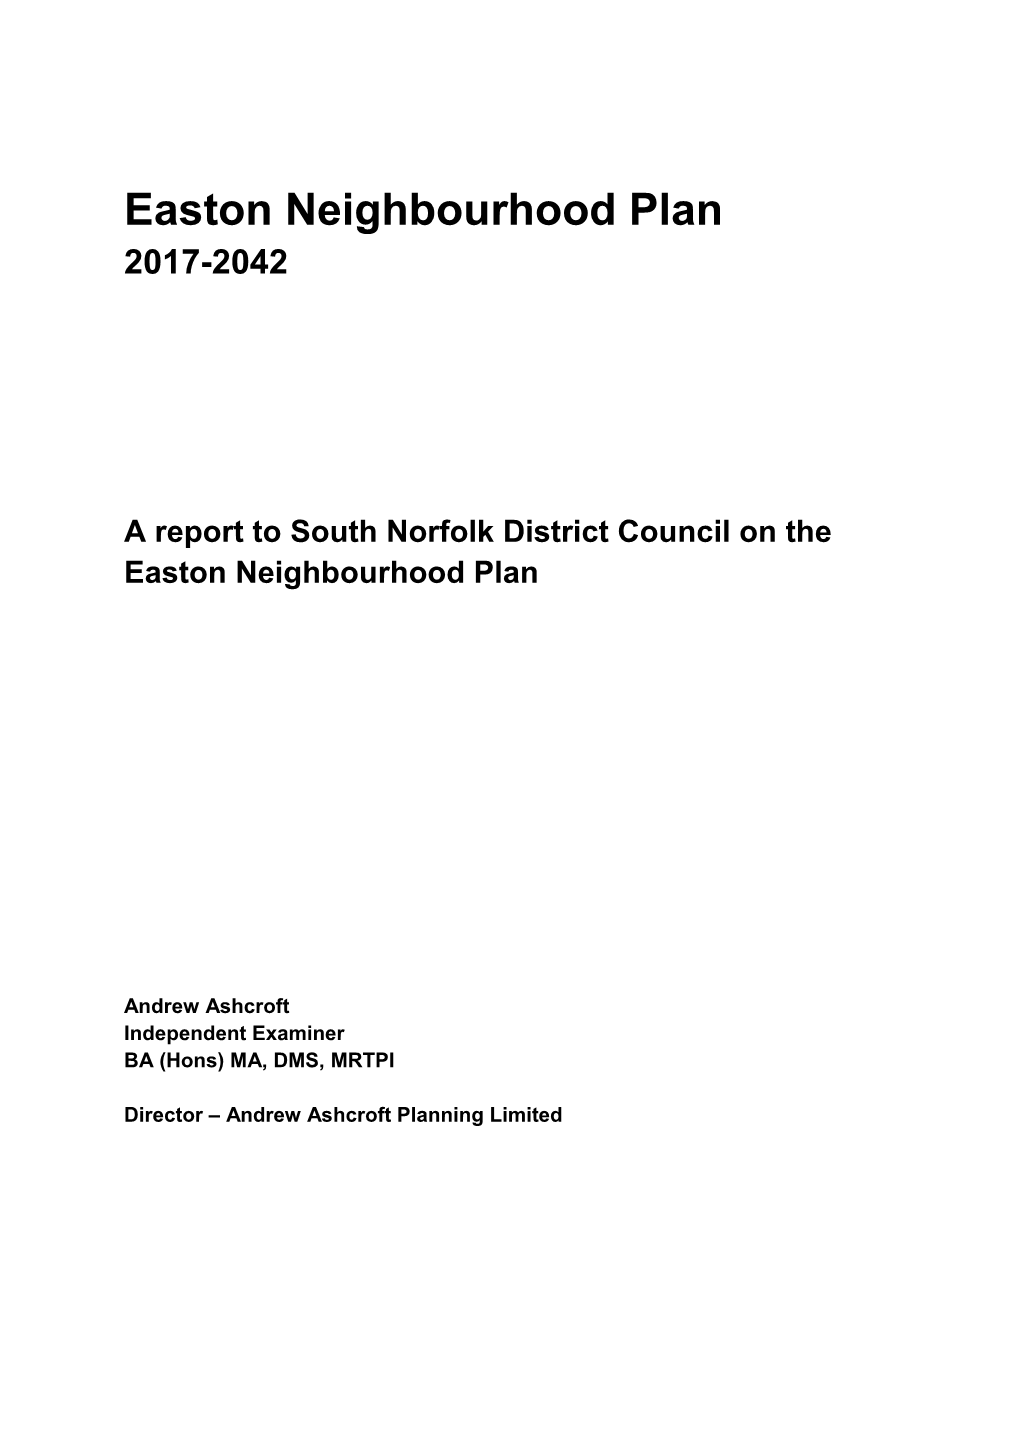 Easton Neighbourhood Plan Examiners Report